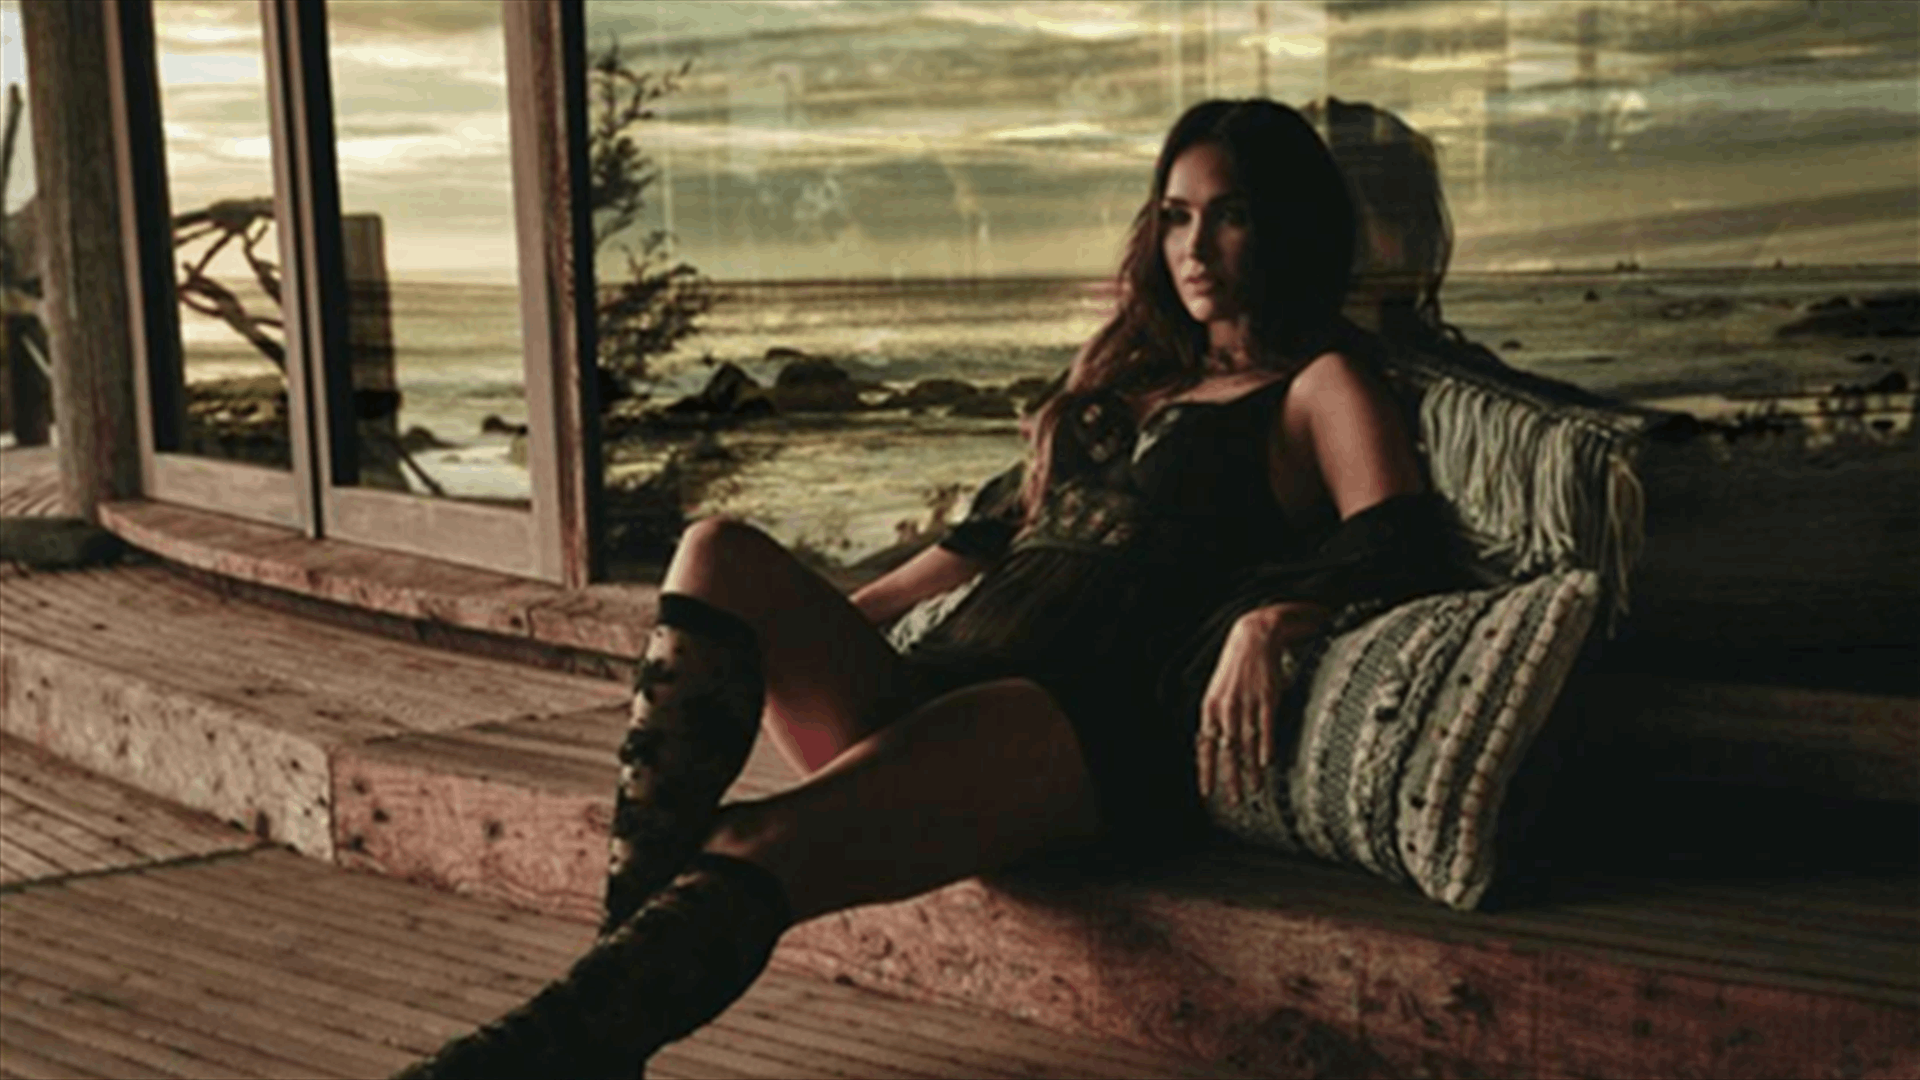 [PHOTOS] Megan Fox Poses In Lace Semi-Sheer For A Beach Shoot